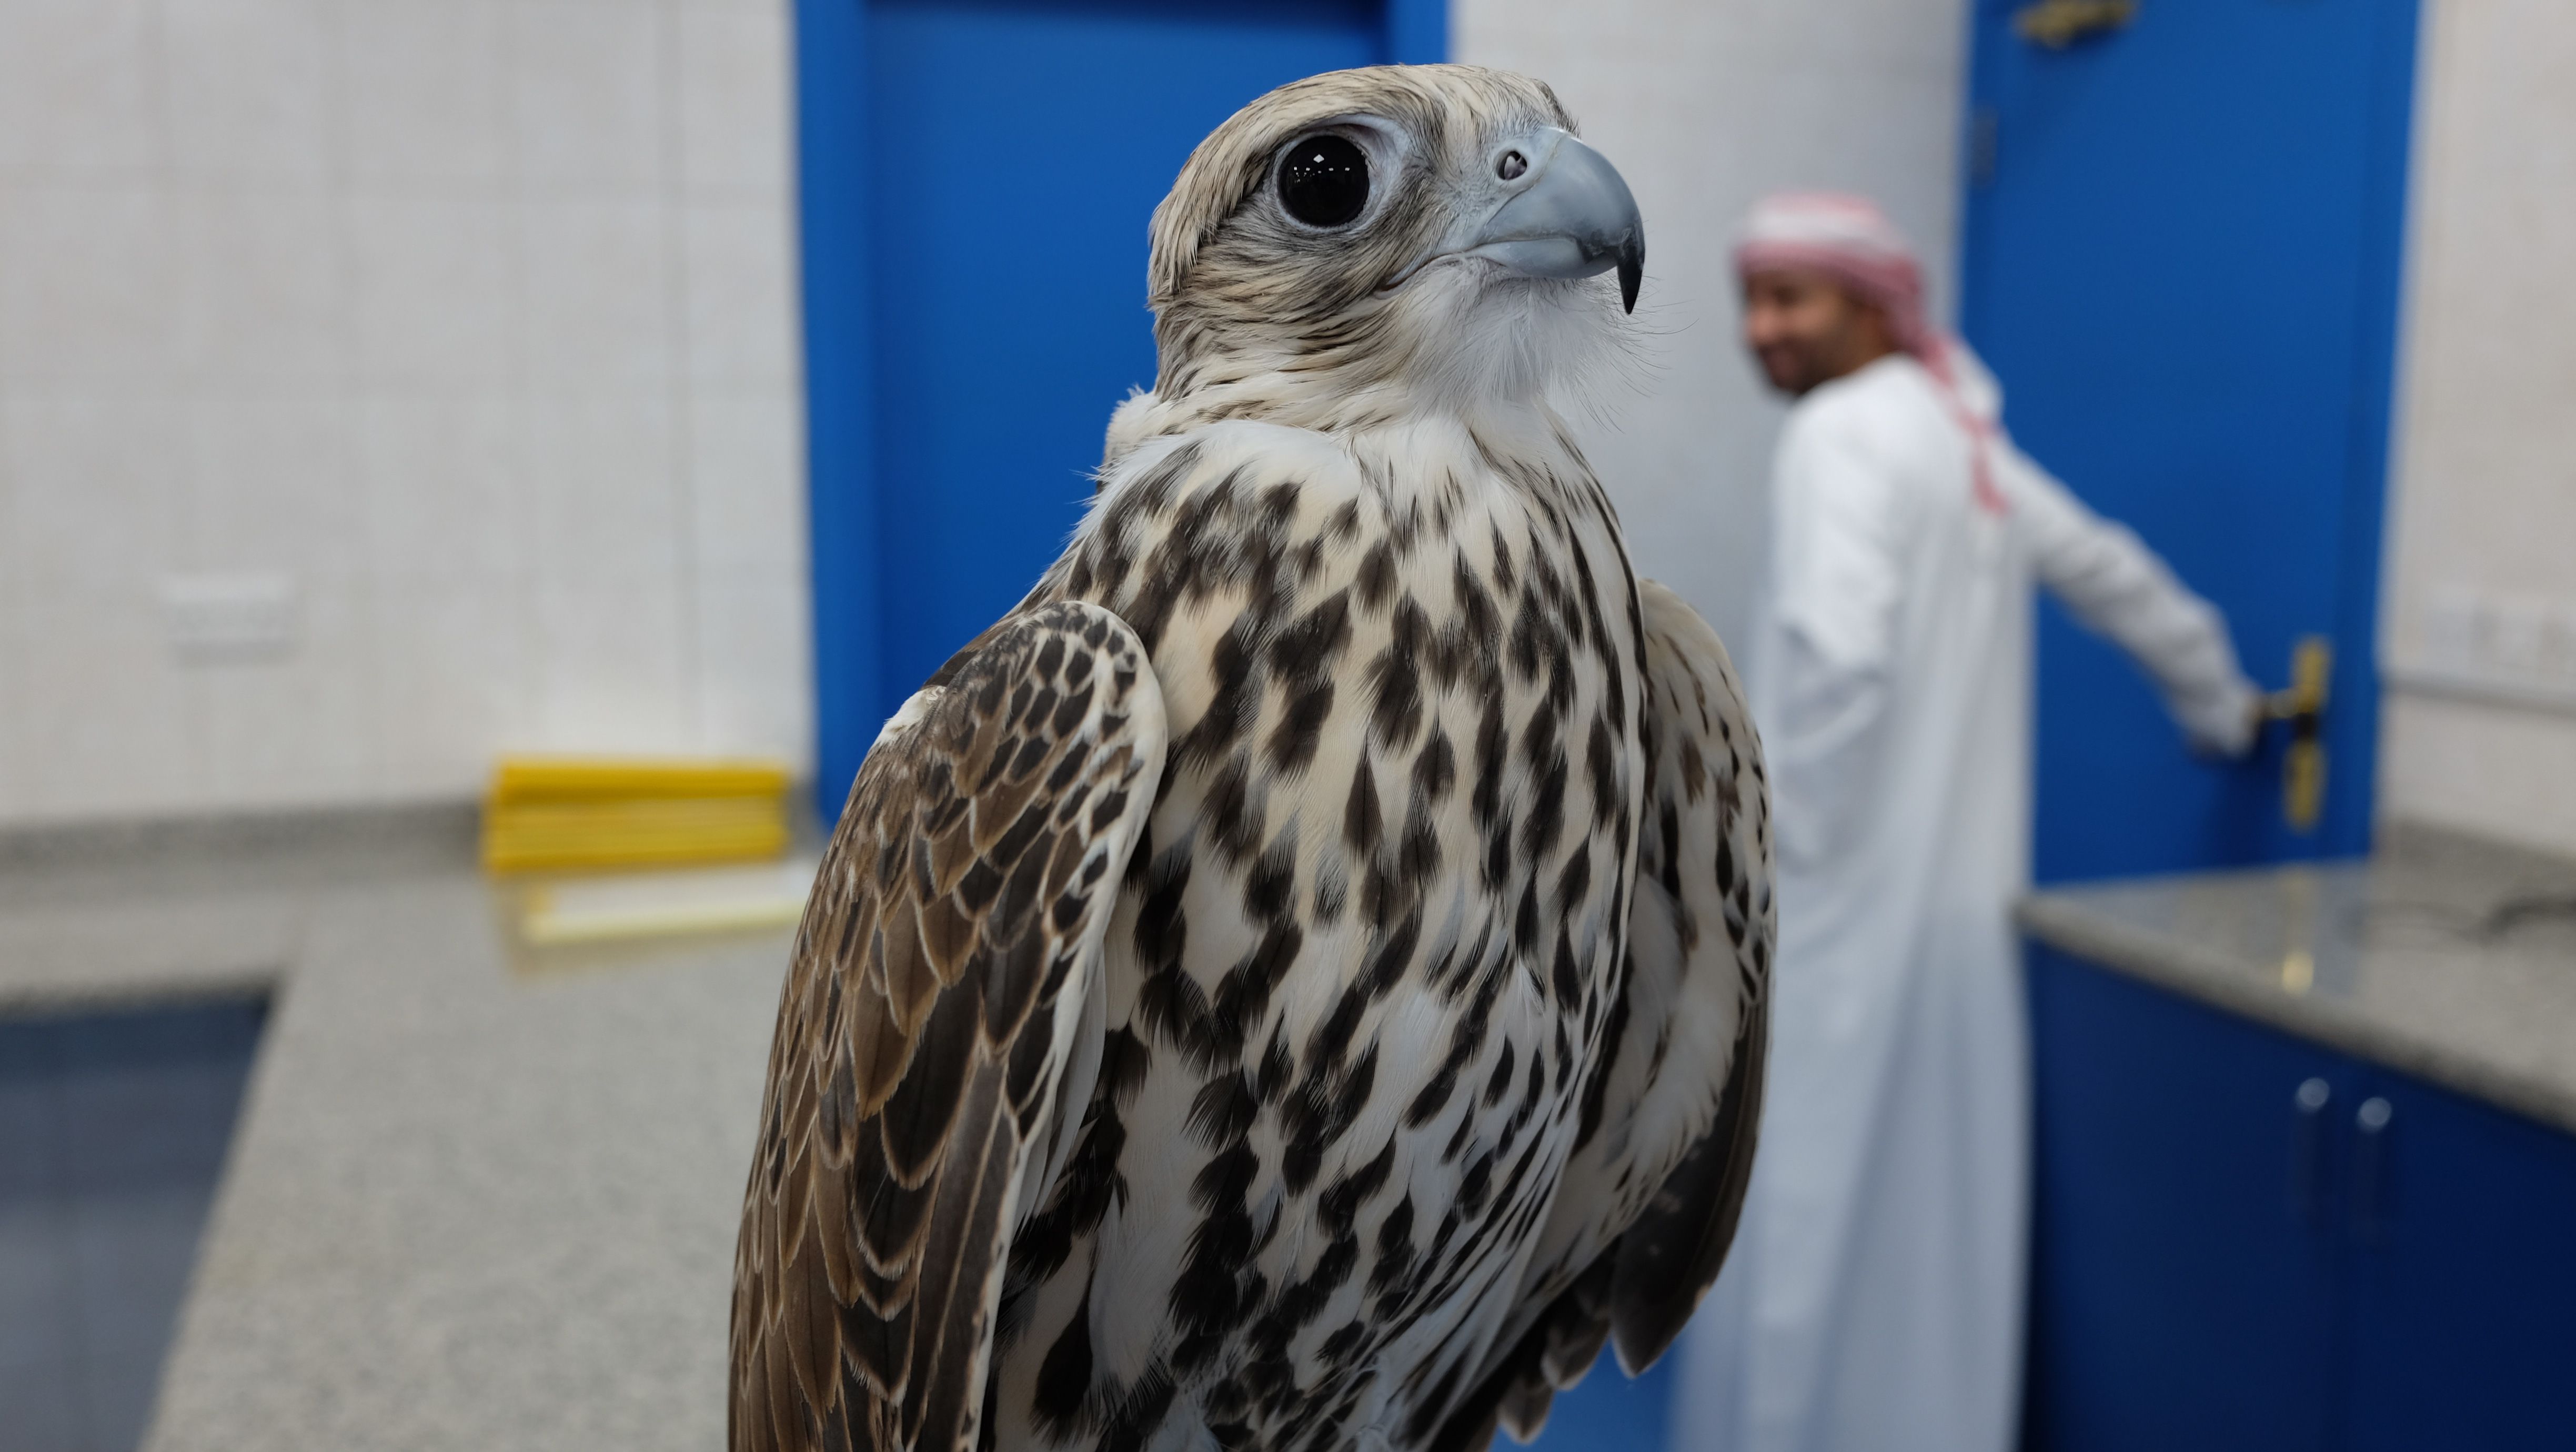 Falcons on a plane: First class treatment for birds of prey | CNN